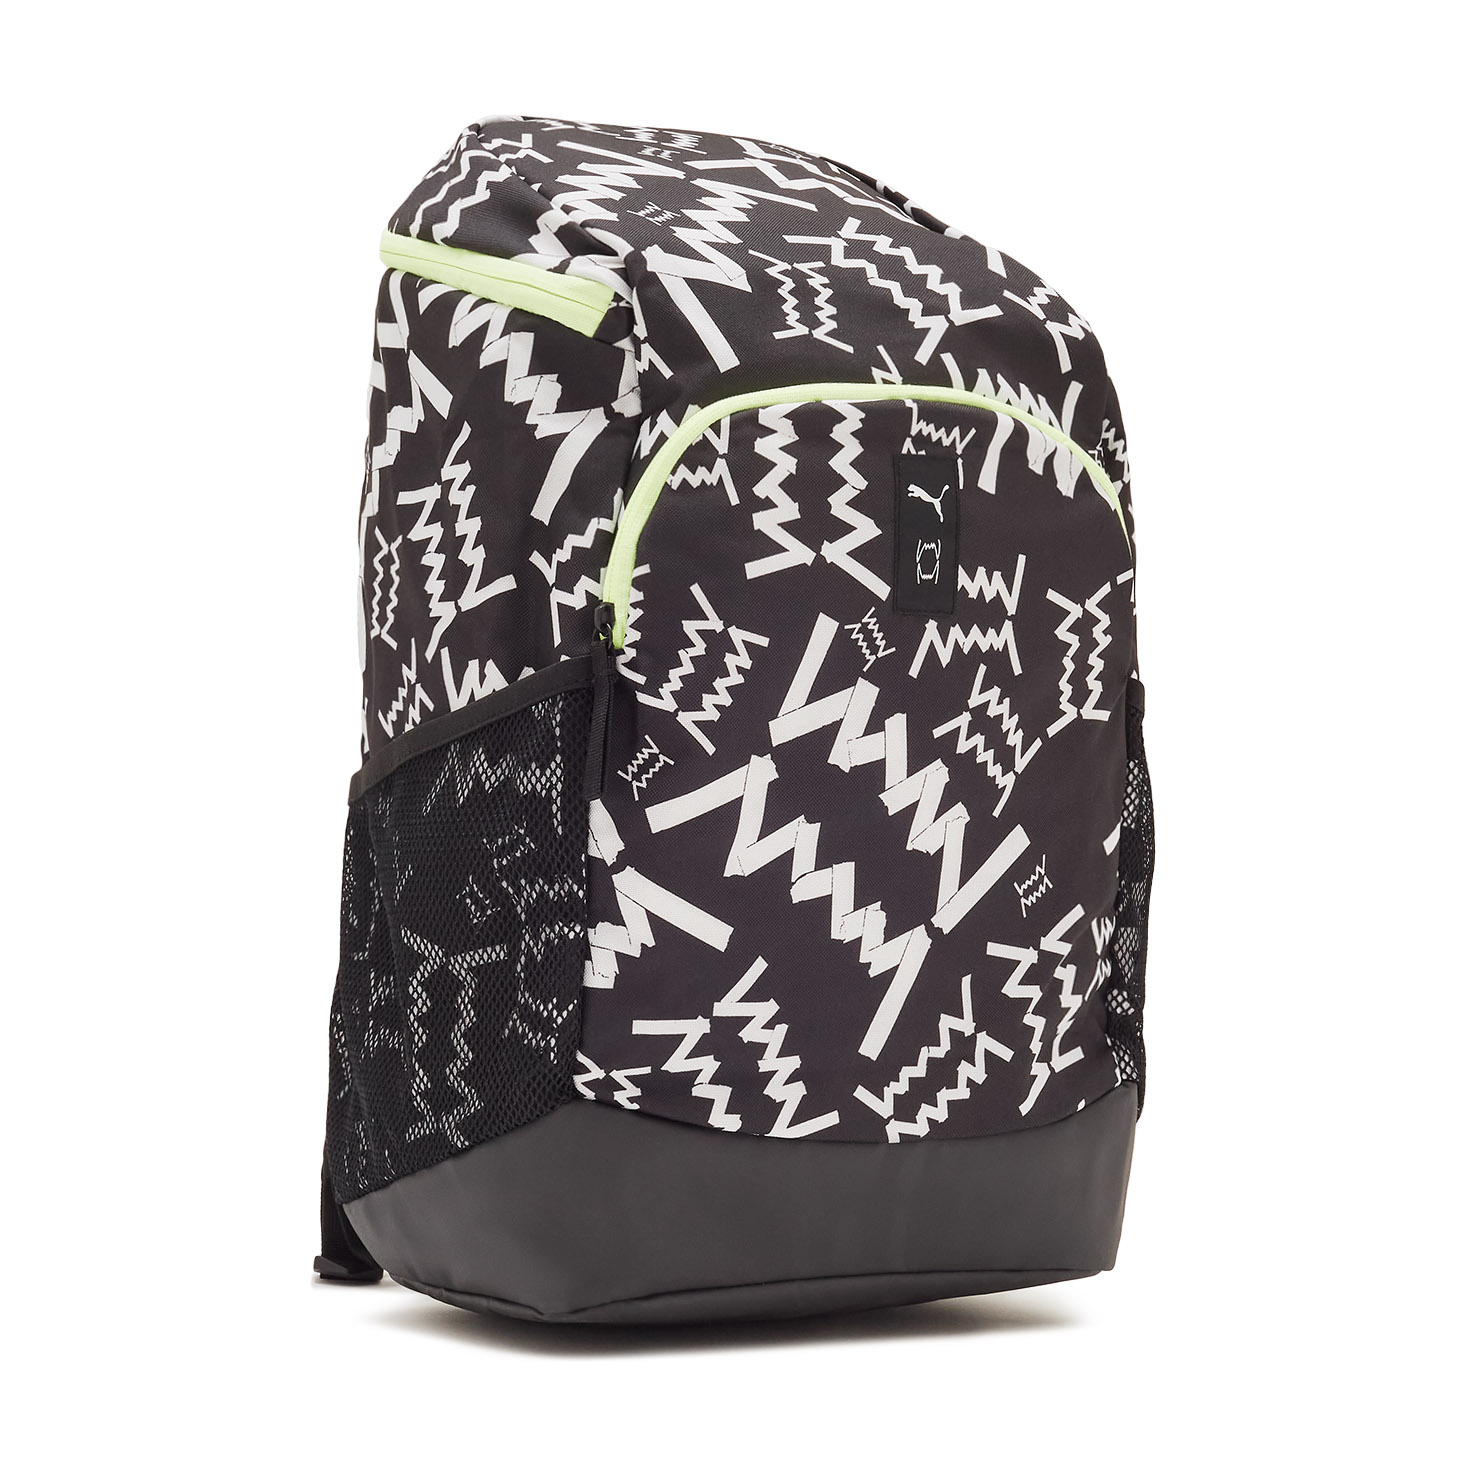 Basketball Backpack PUMA, размер Один размер, цвет черный PM079205 - фото 3